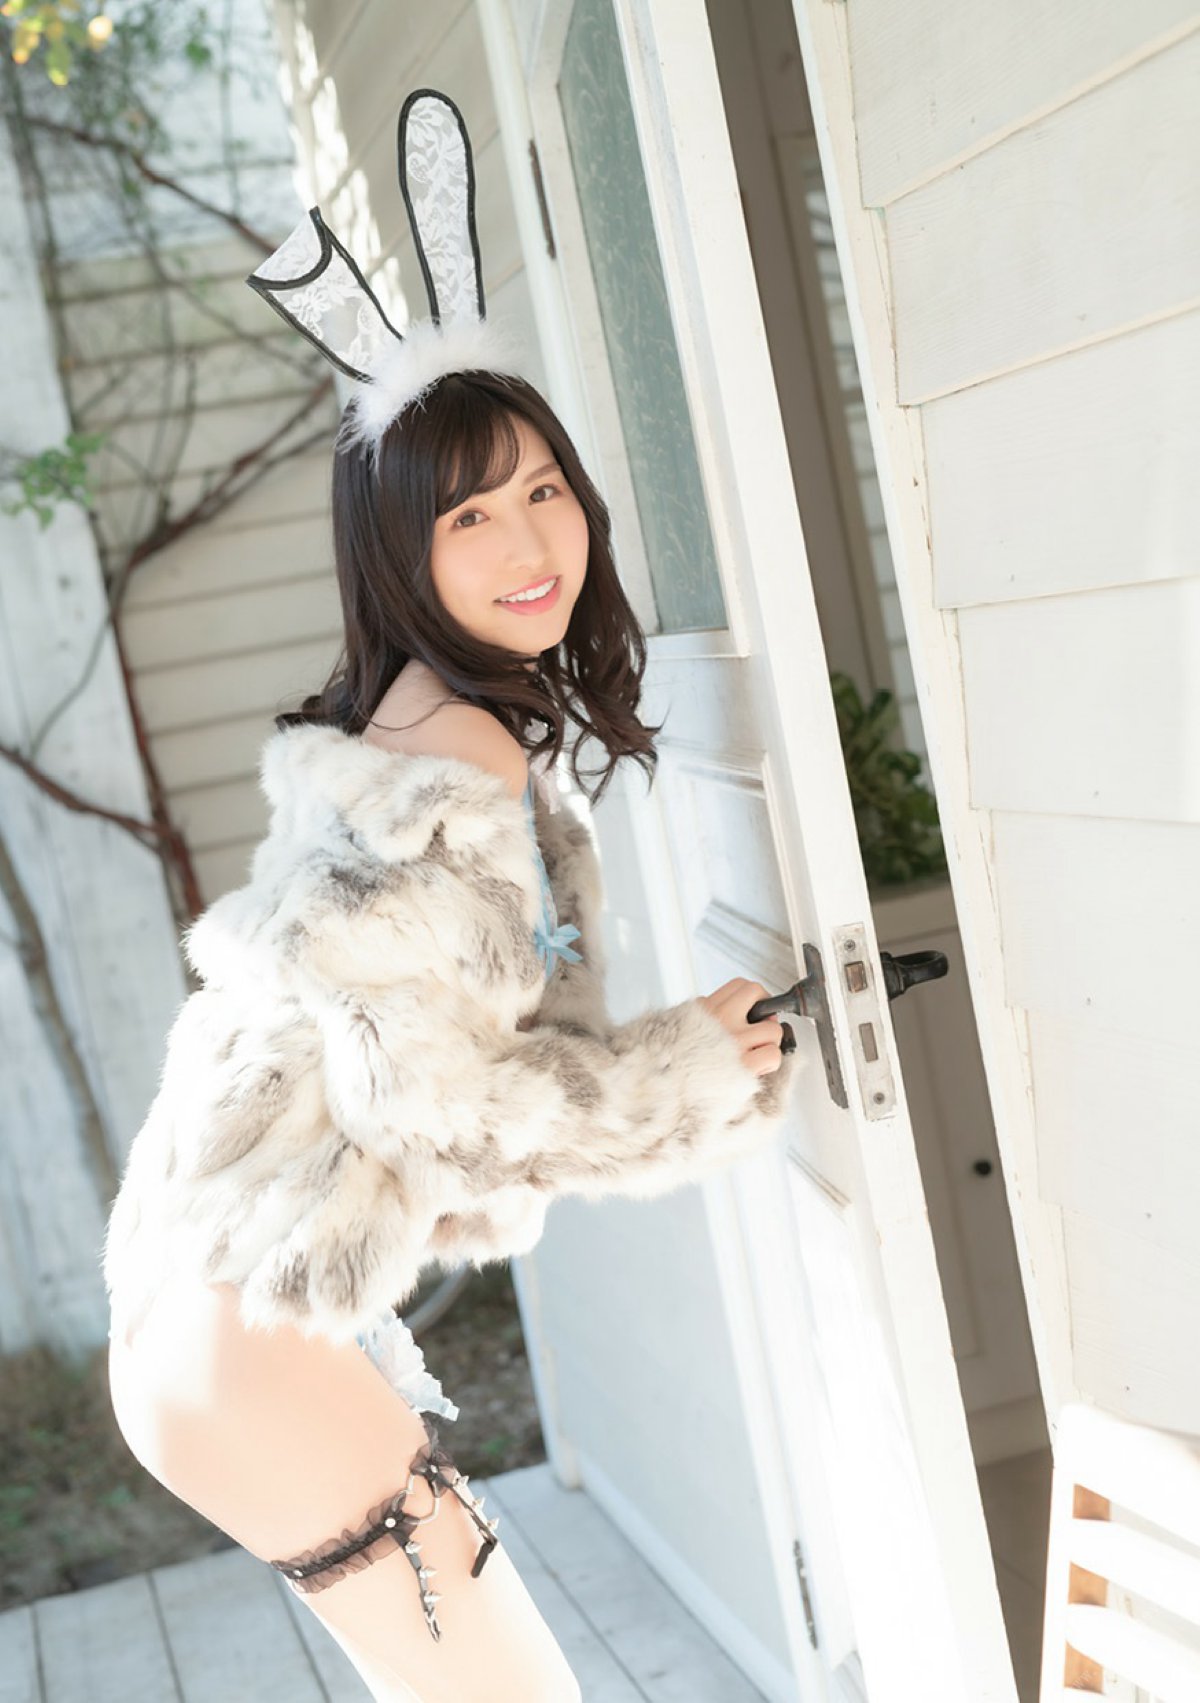 Photobook Momo Sakura 桜空もも Count sheep Nap 2021 10 24 0021 1913491939.jpg